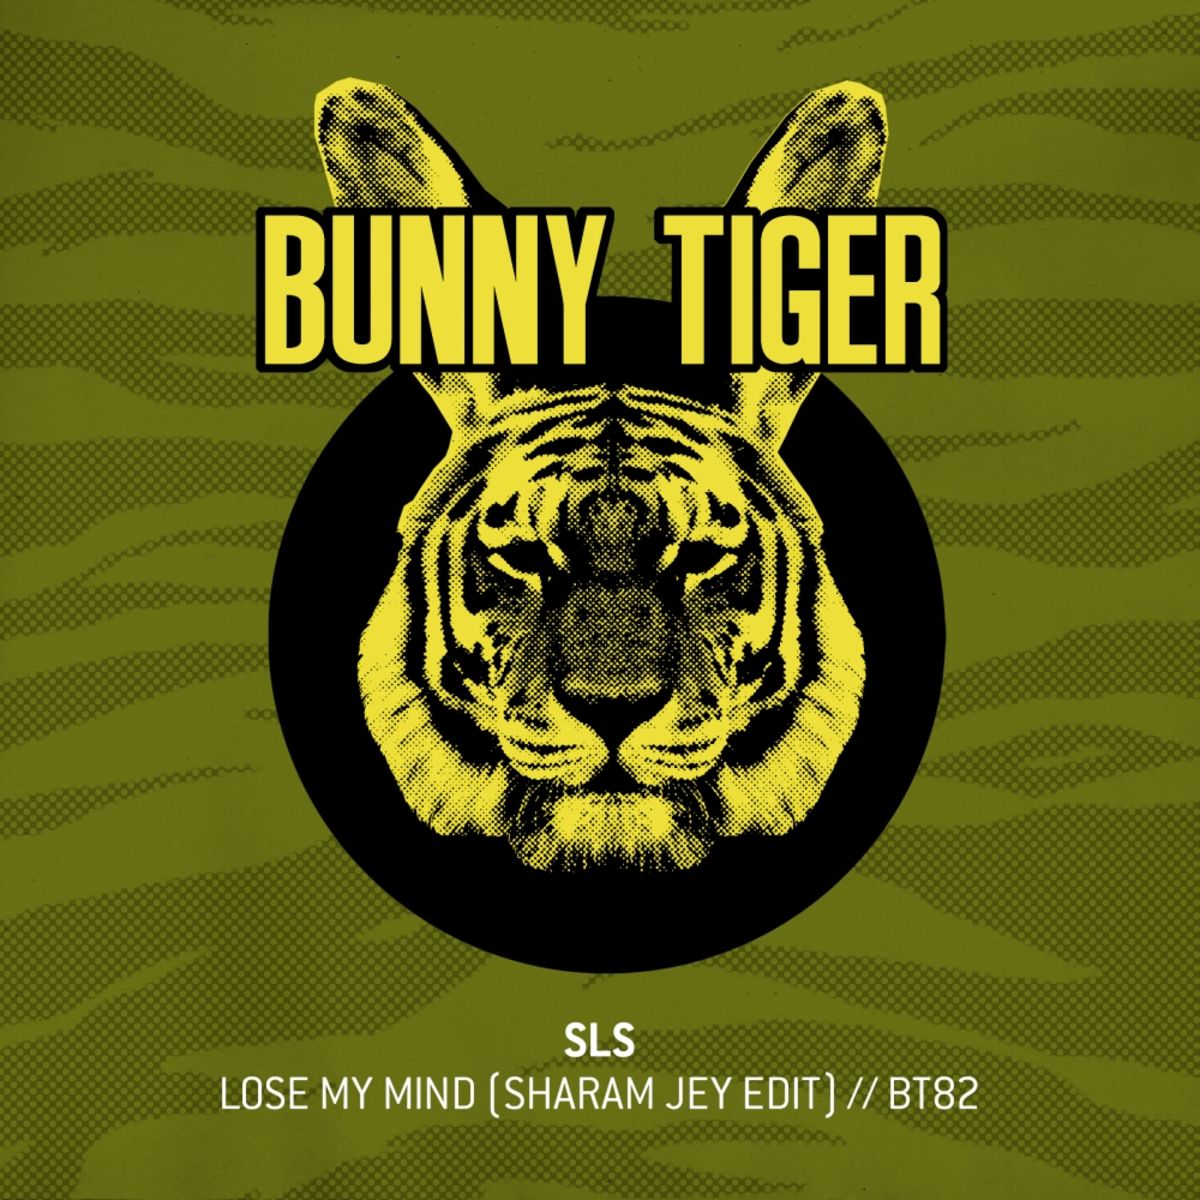 SLS - Lose My Mind (Sharam Jey Edit) / Bunny Tiger